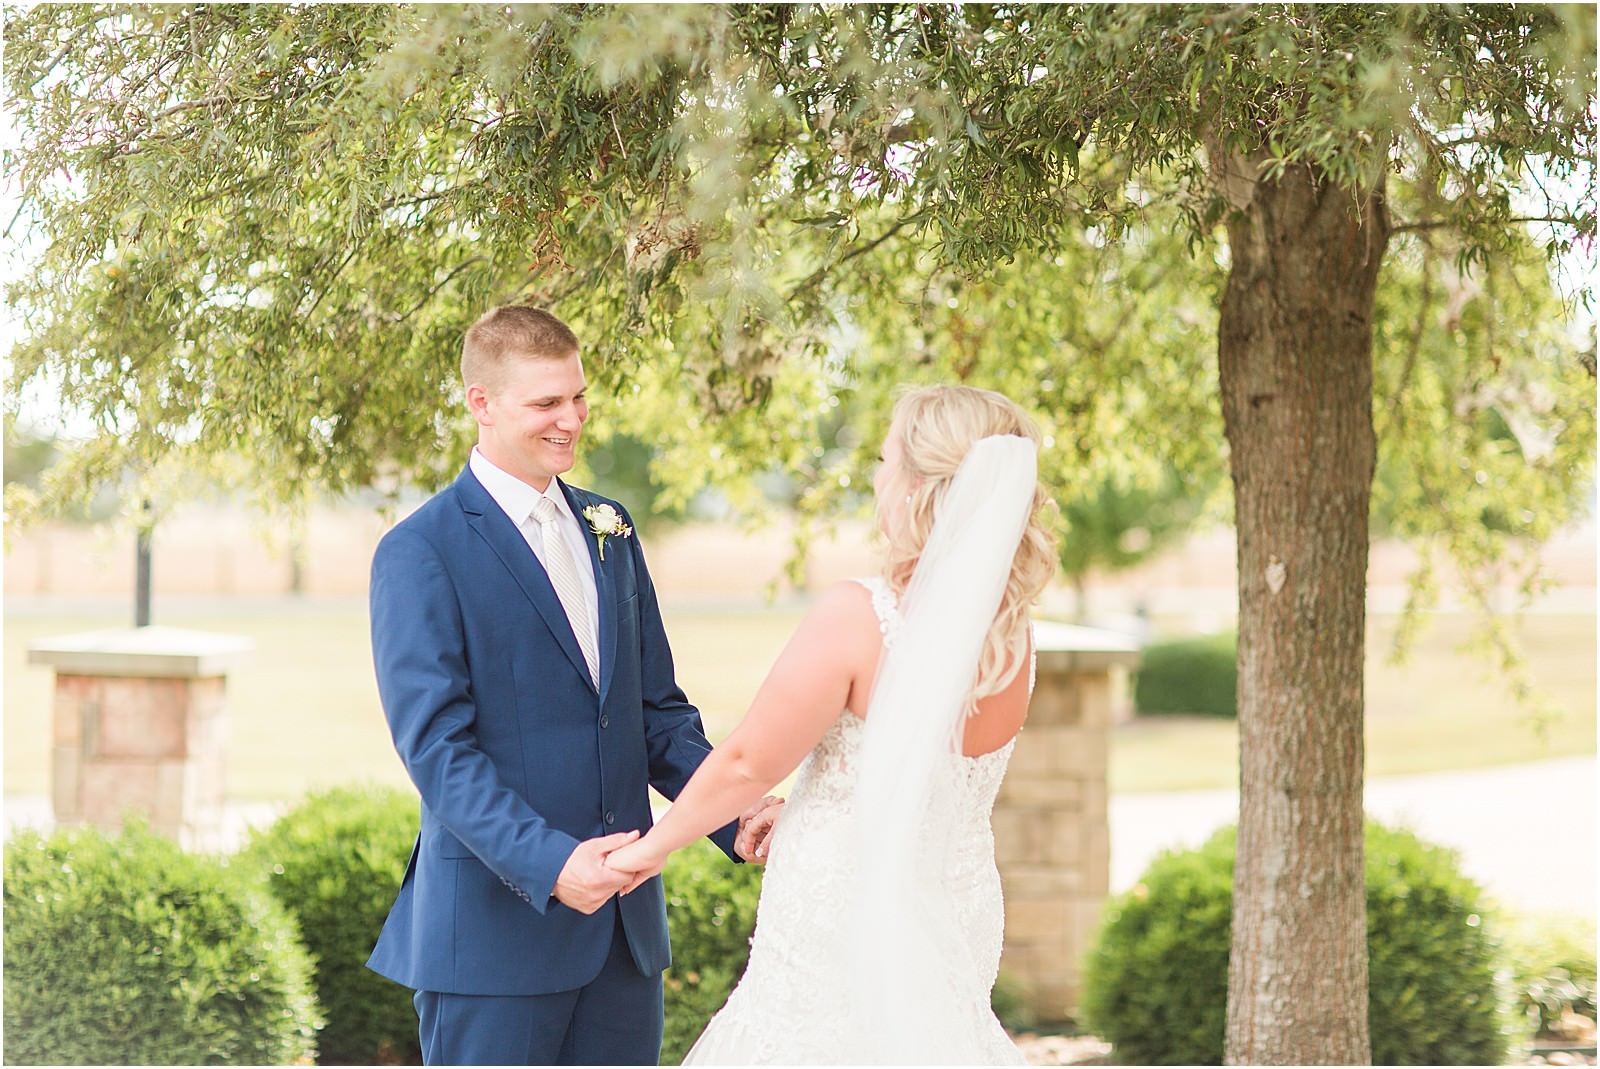 Kelsey and Caleb | Walkers Bluff Winery Wedding | Bret and Brandie Photography039.jpg